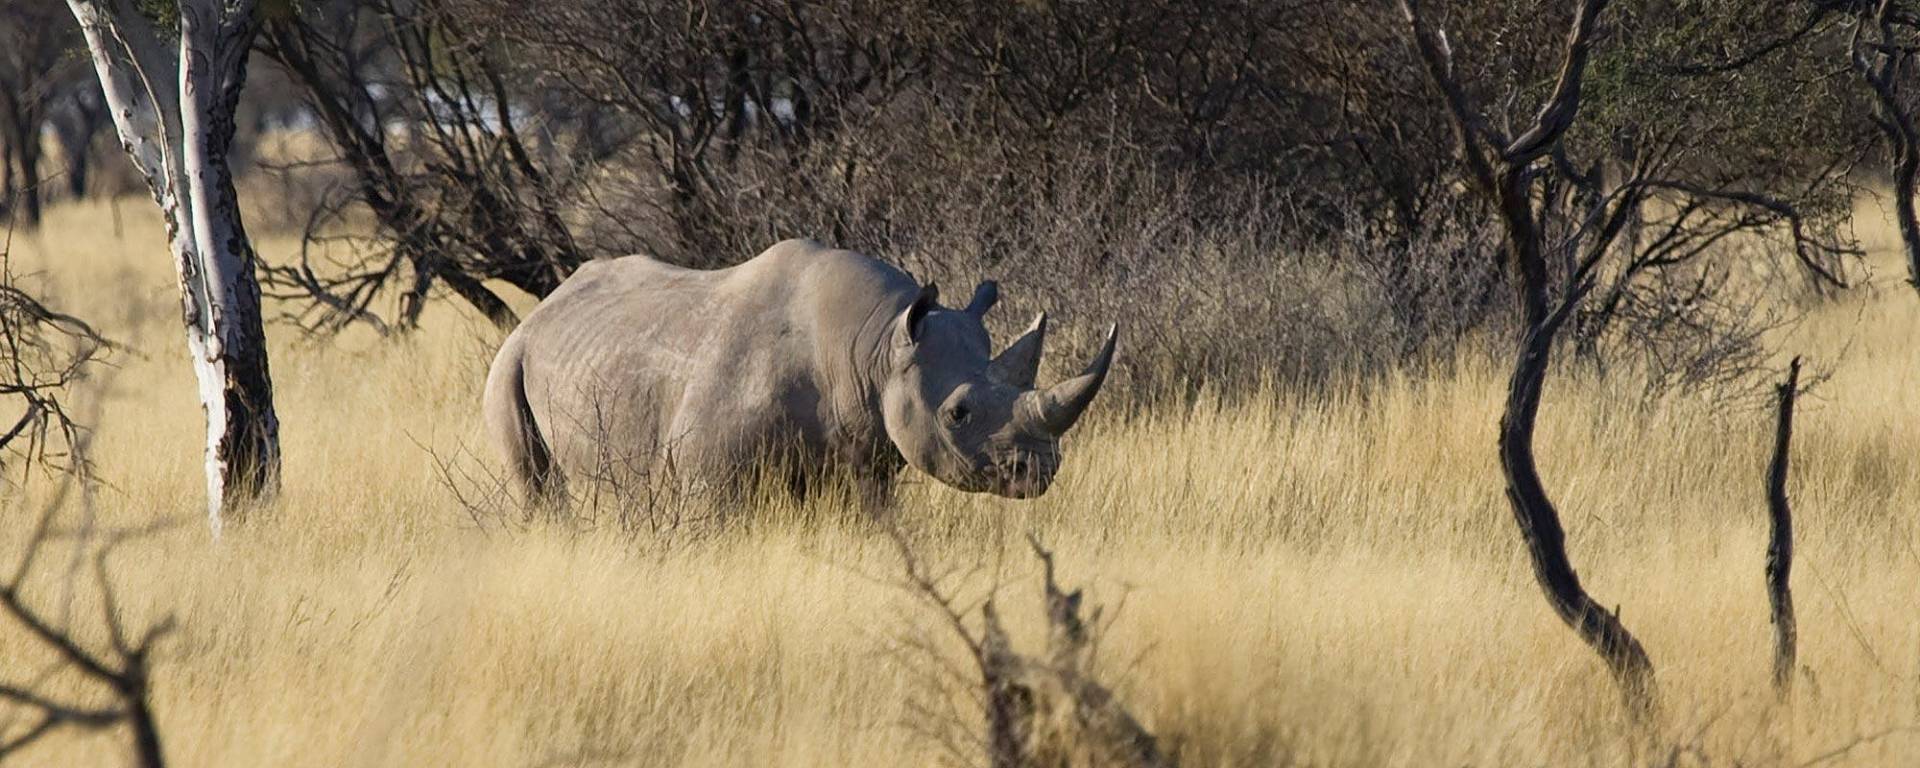 Tracking Hooked Lipped Rhinoceros